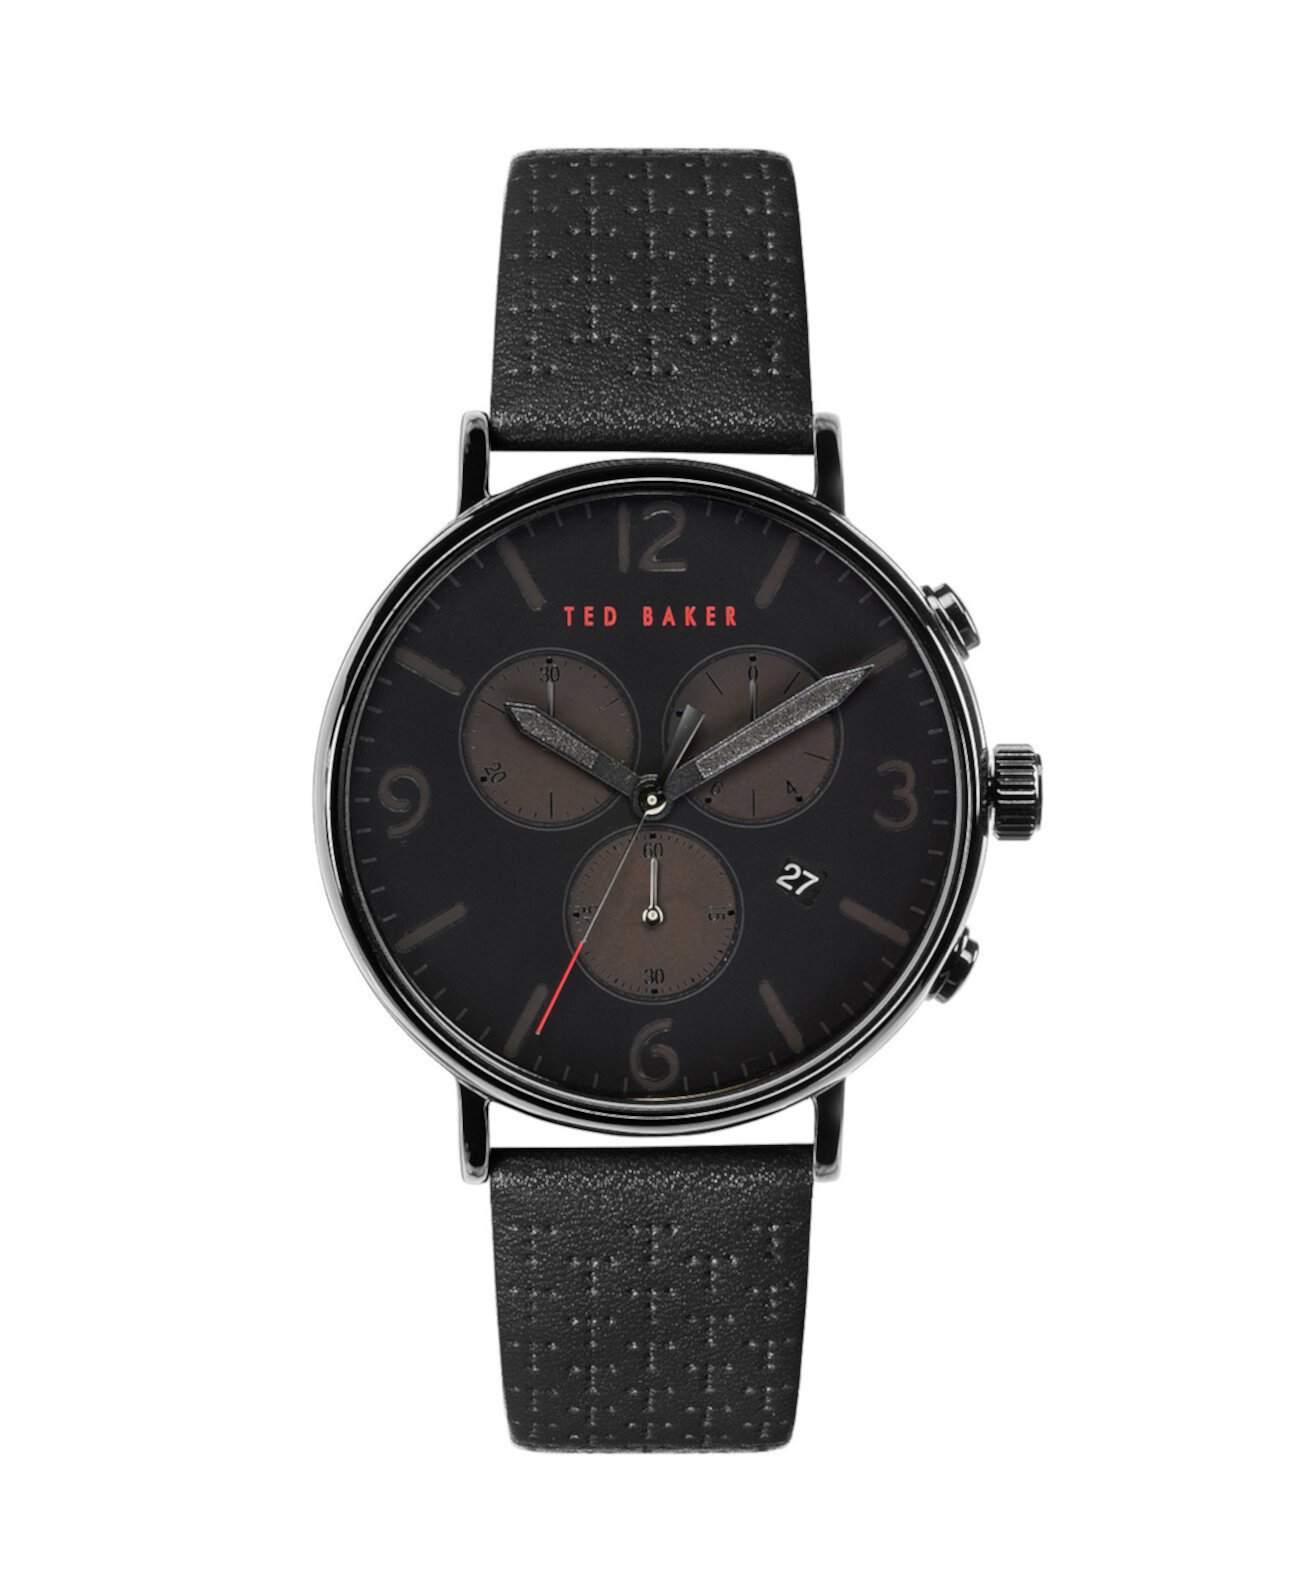 Мужские часы Barnett Backlight с черным кожаным ремешком 41 мм Ted Baker